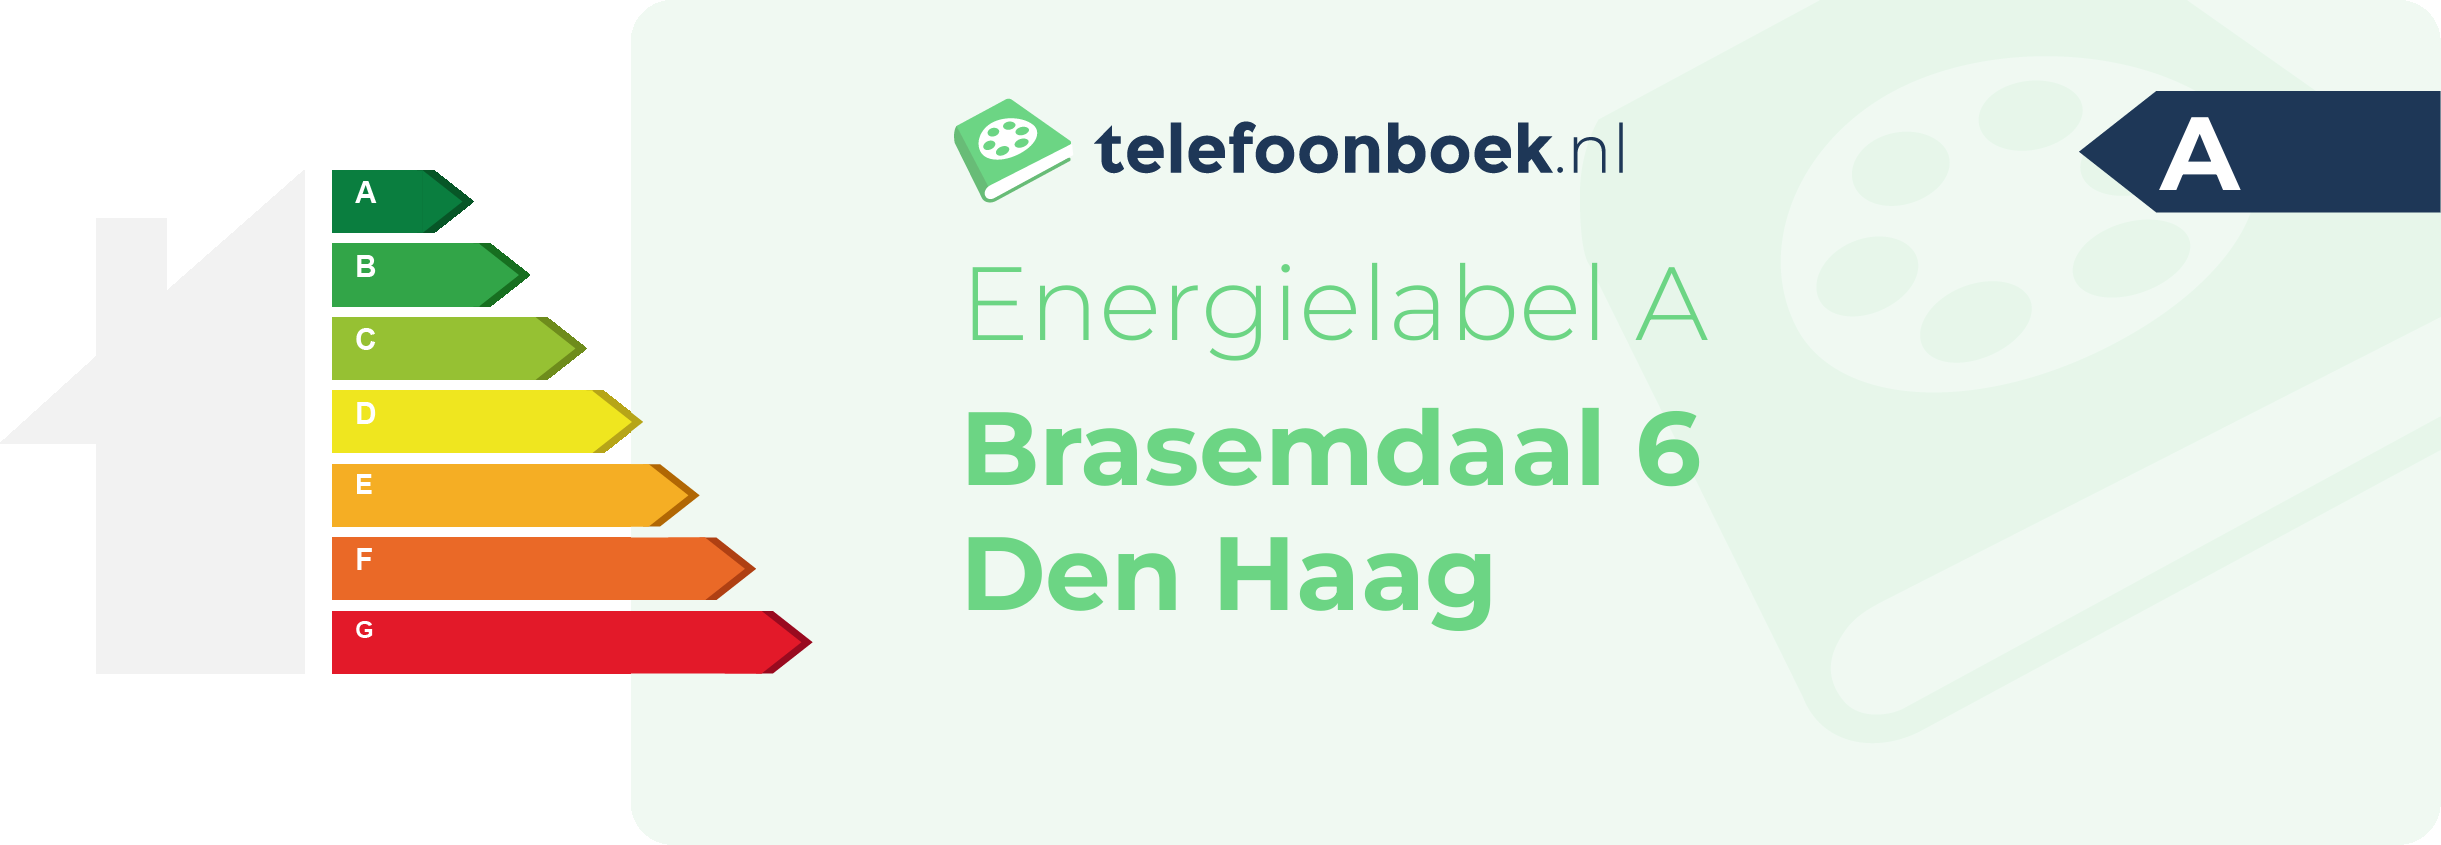 Energielabel Brasemdaal 6 Den Haag